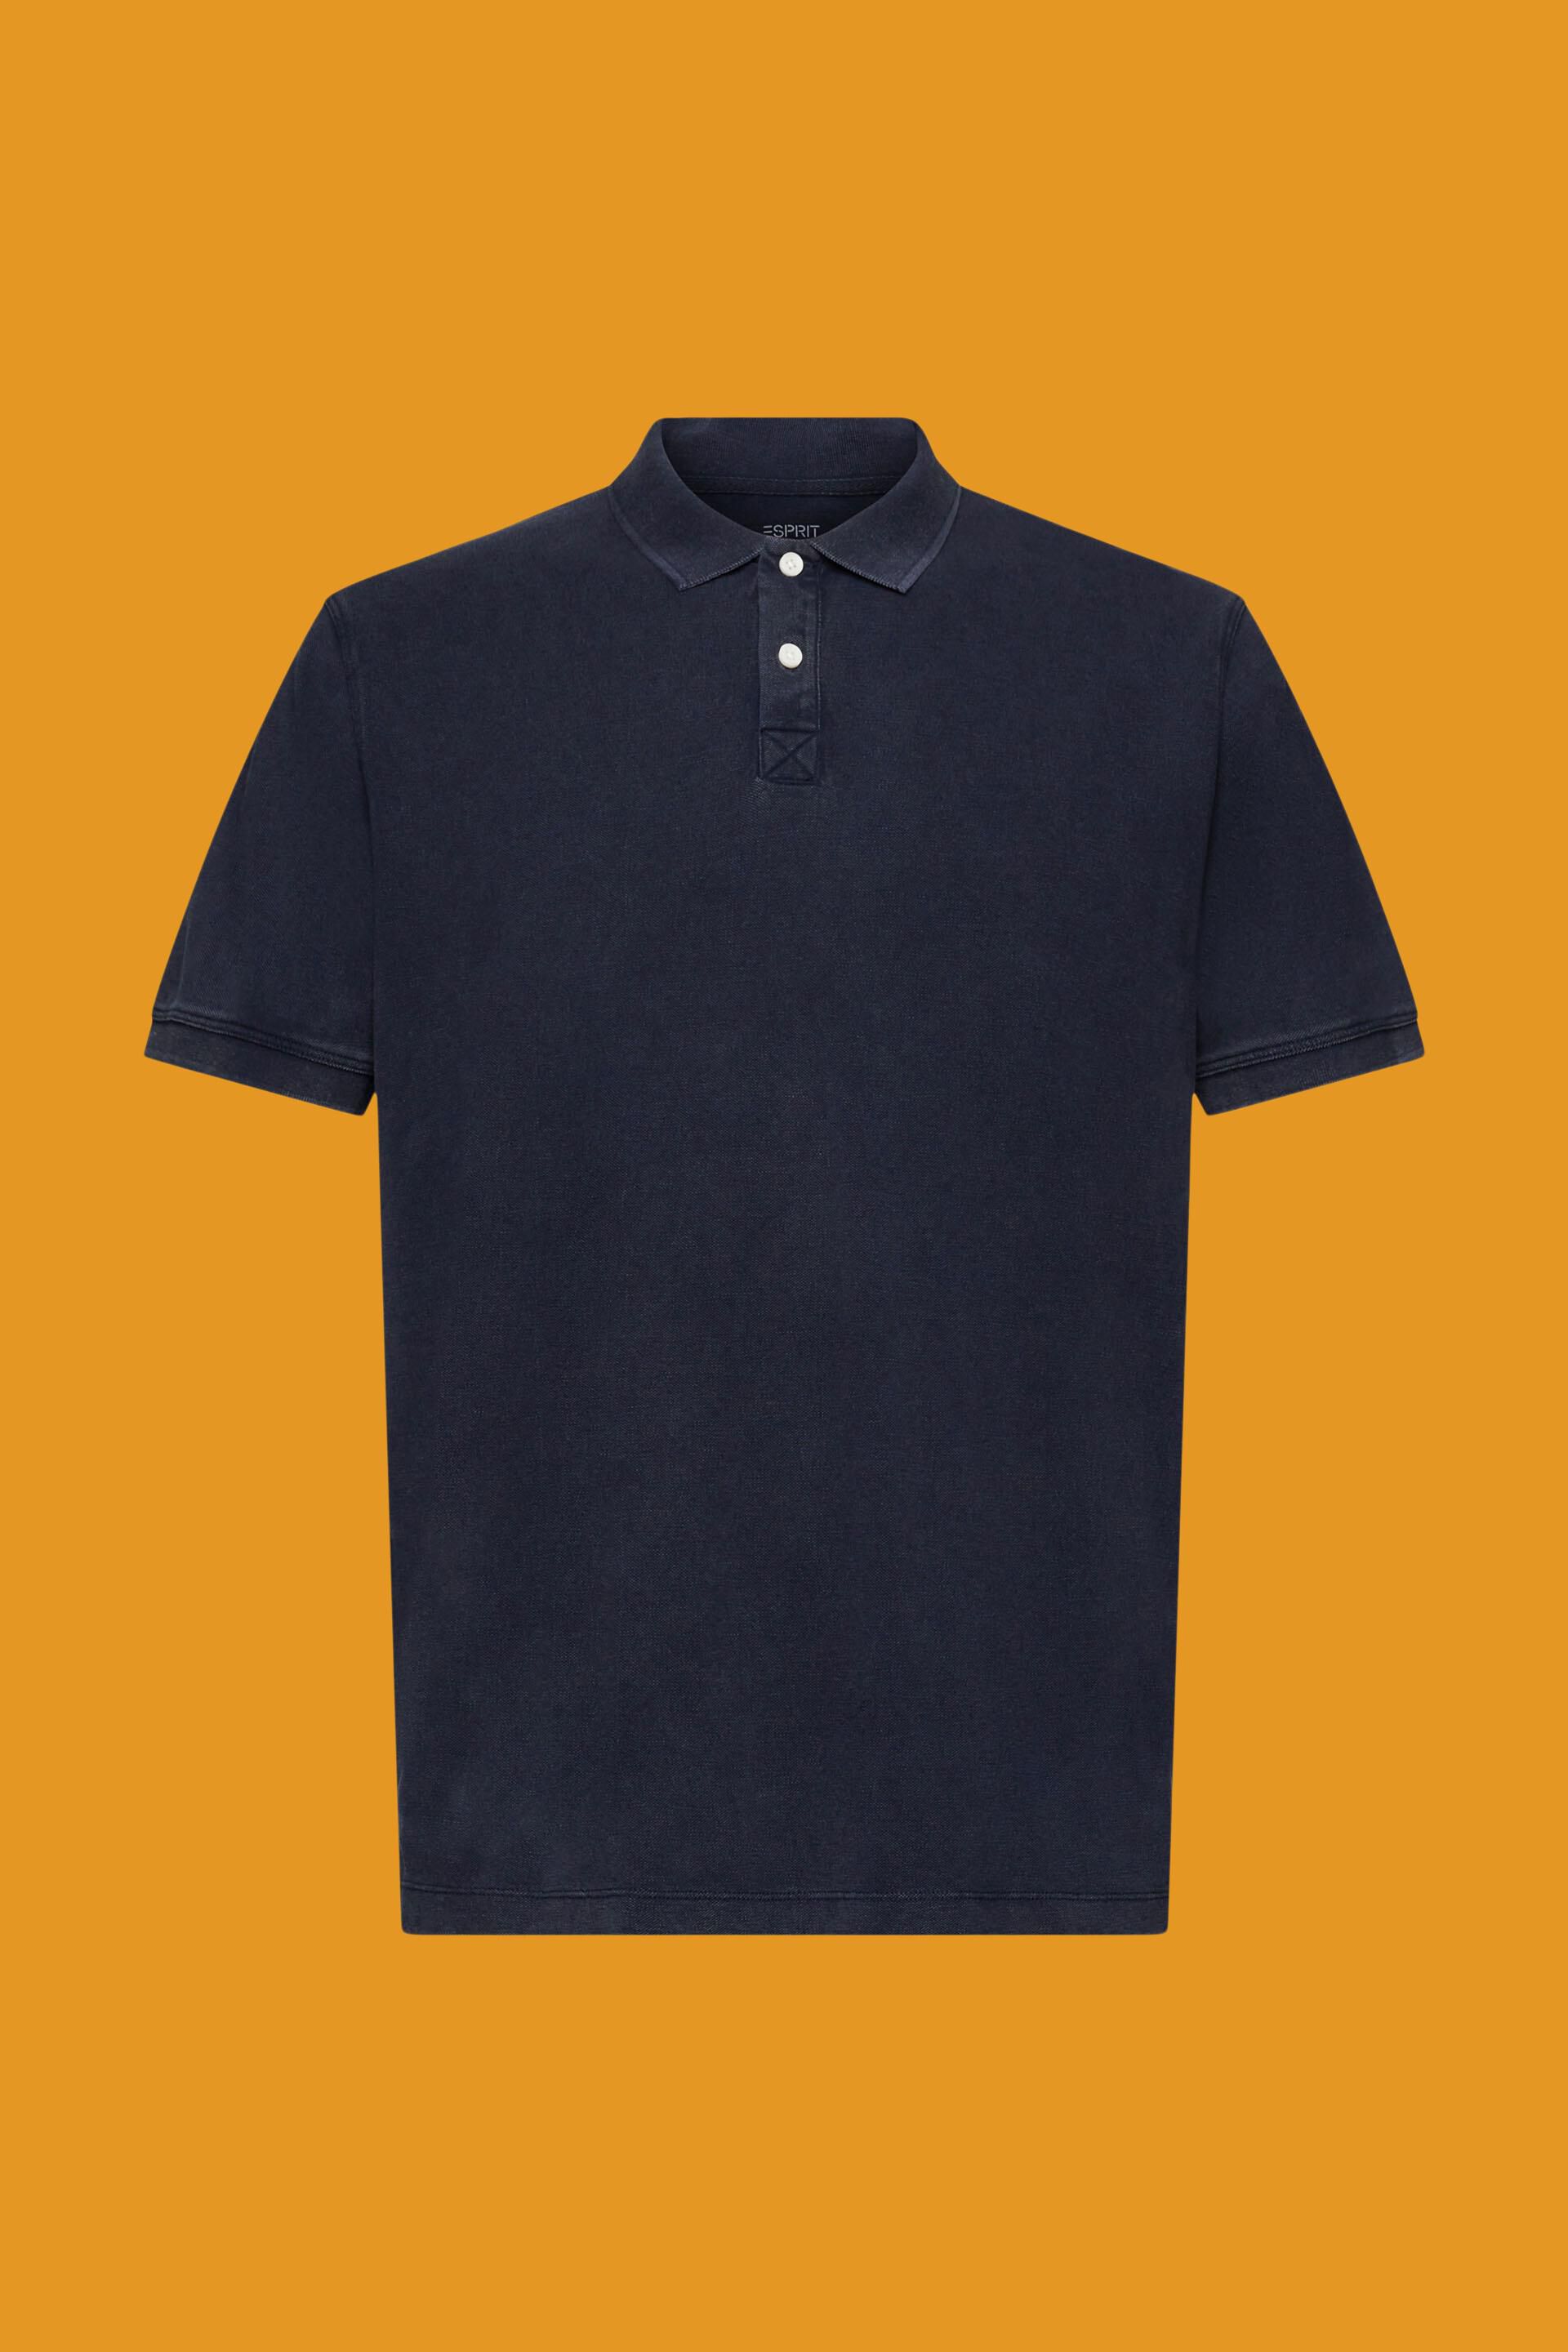 ESPRIT - Stone-washed cotton pique polo shirt at our online shop